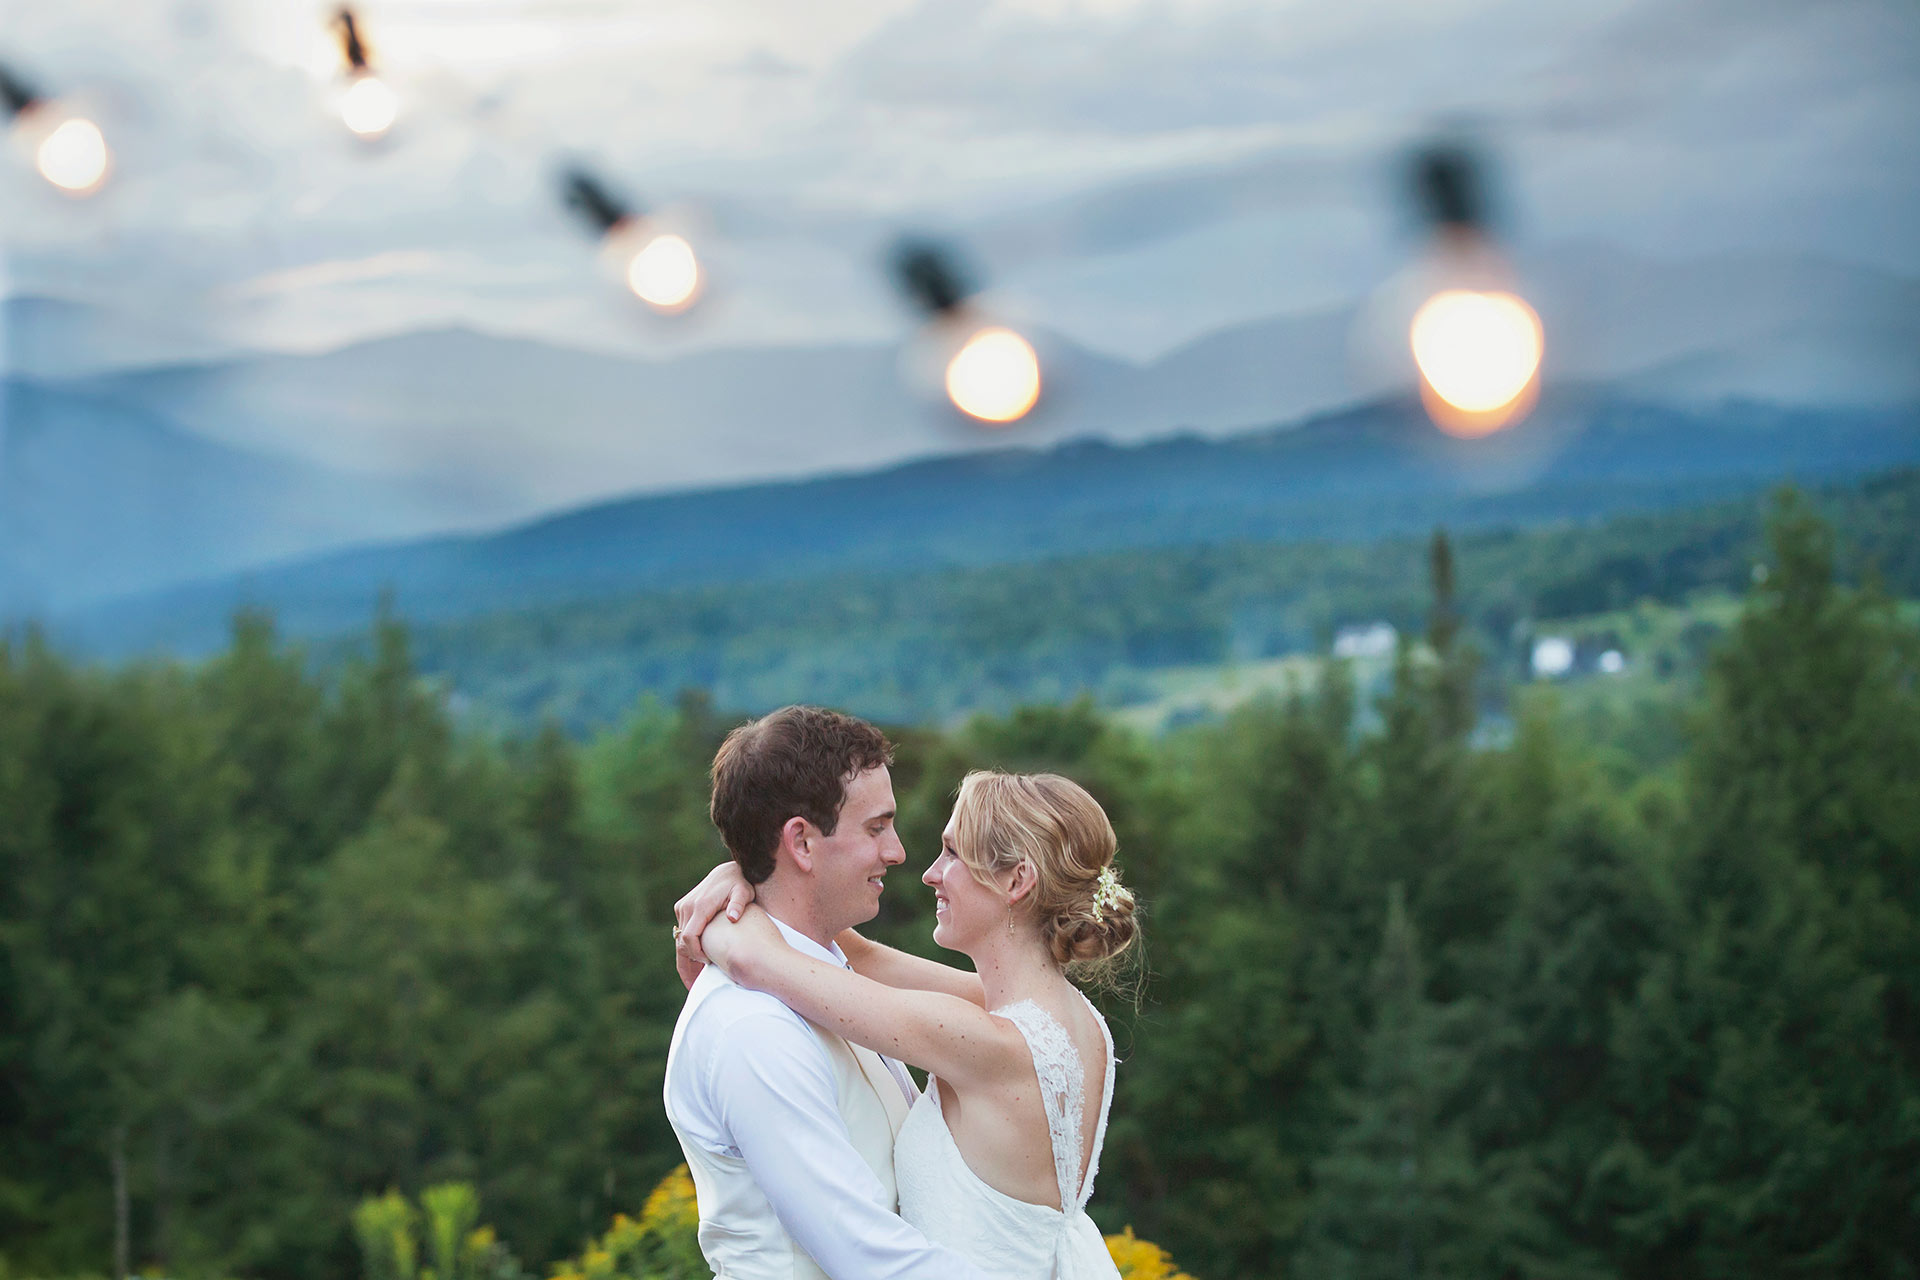 Saying "I do" in Stowe? Imagine this panoramic mountain scenery as your wedding backdrop. Start planning your dream Vermont wedding today! #StoweWeddingVenue #VermontElopement #vermontweddingphotographer